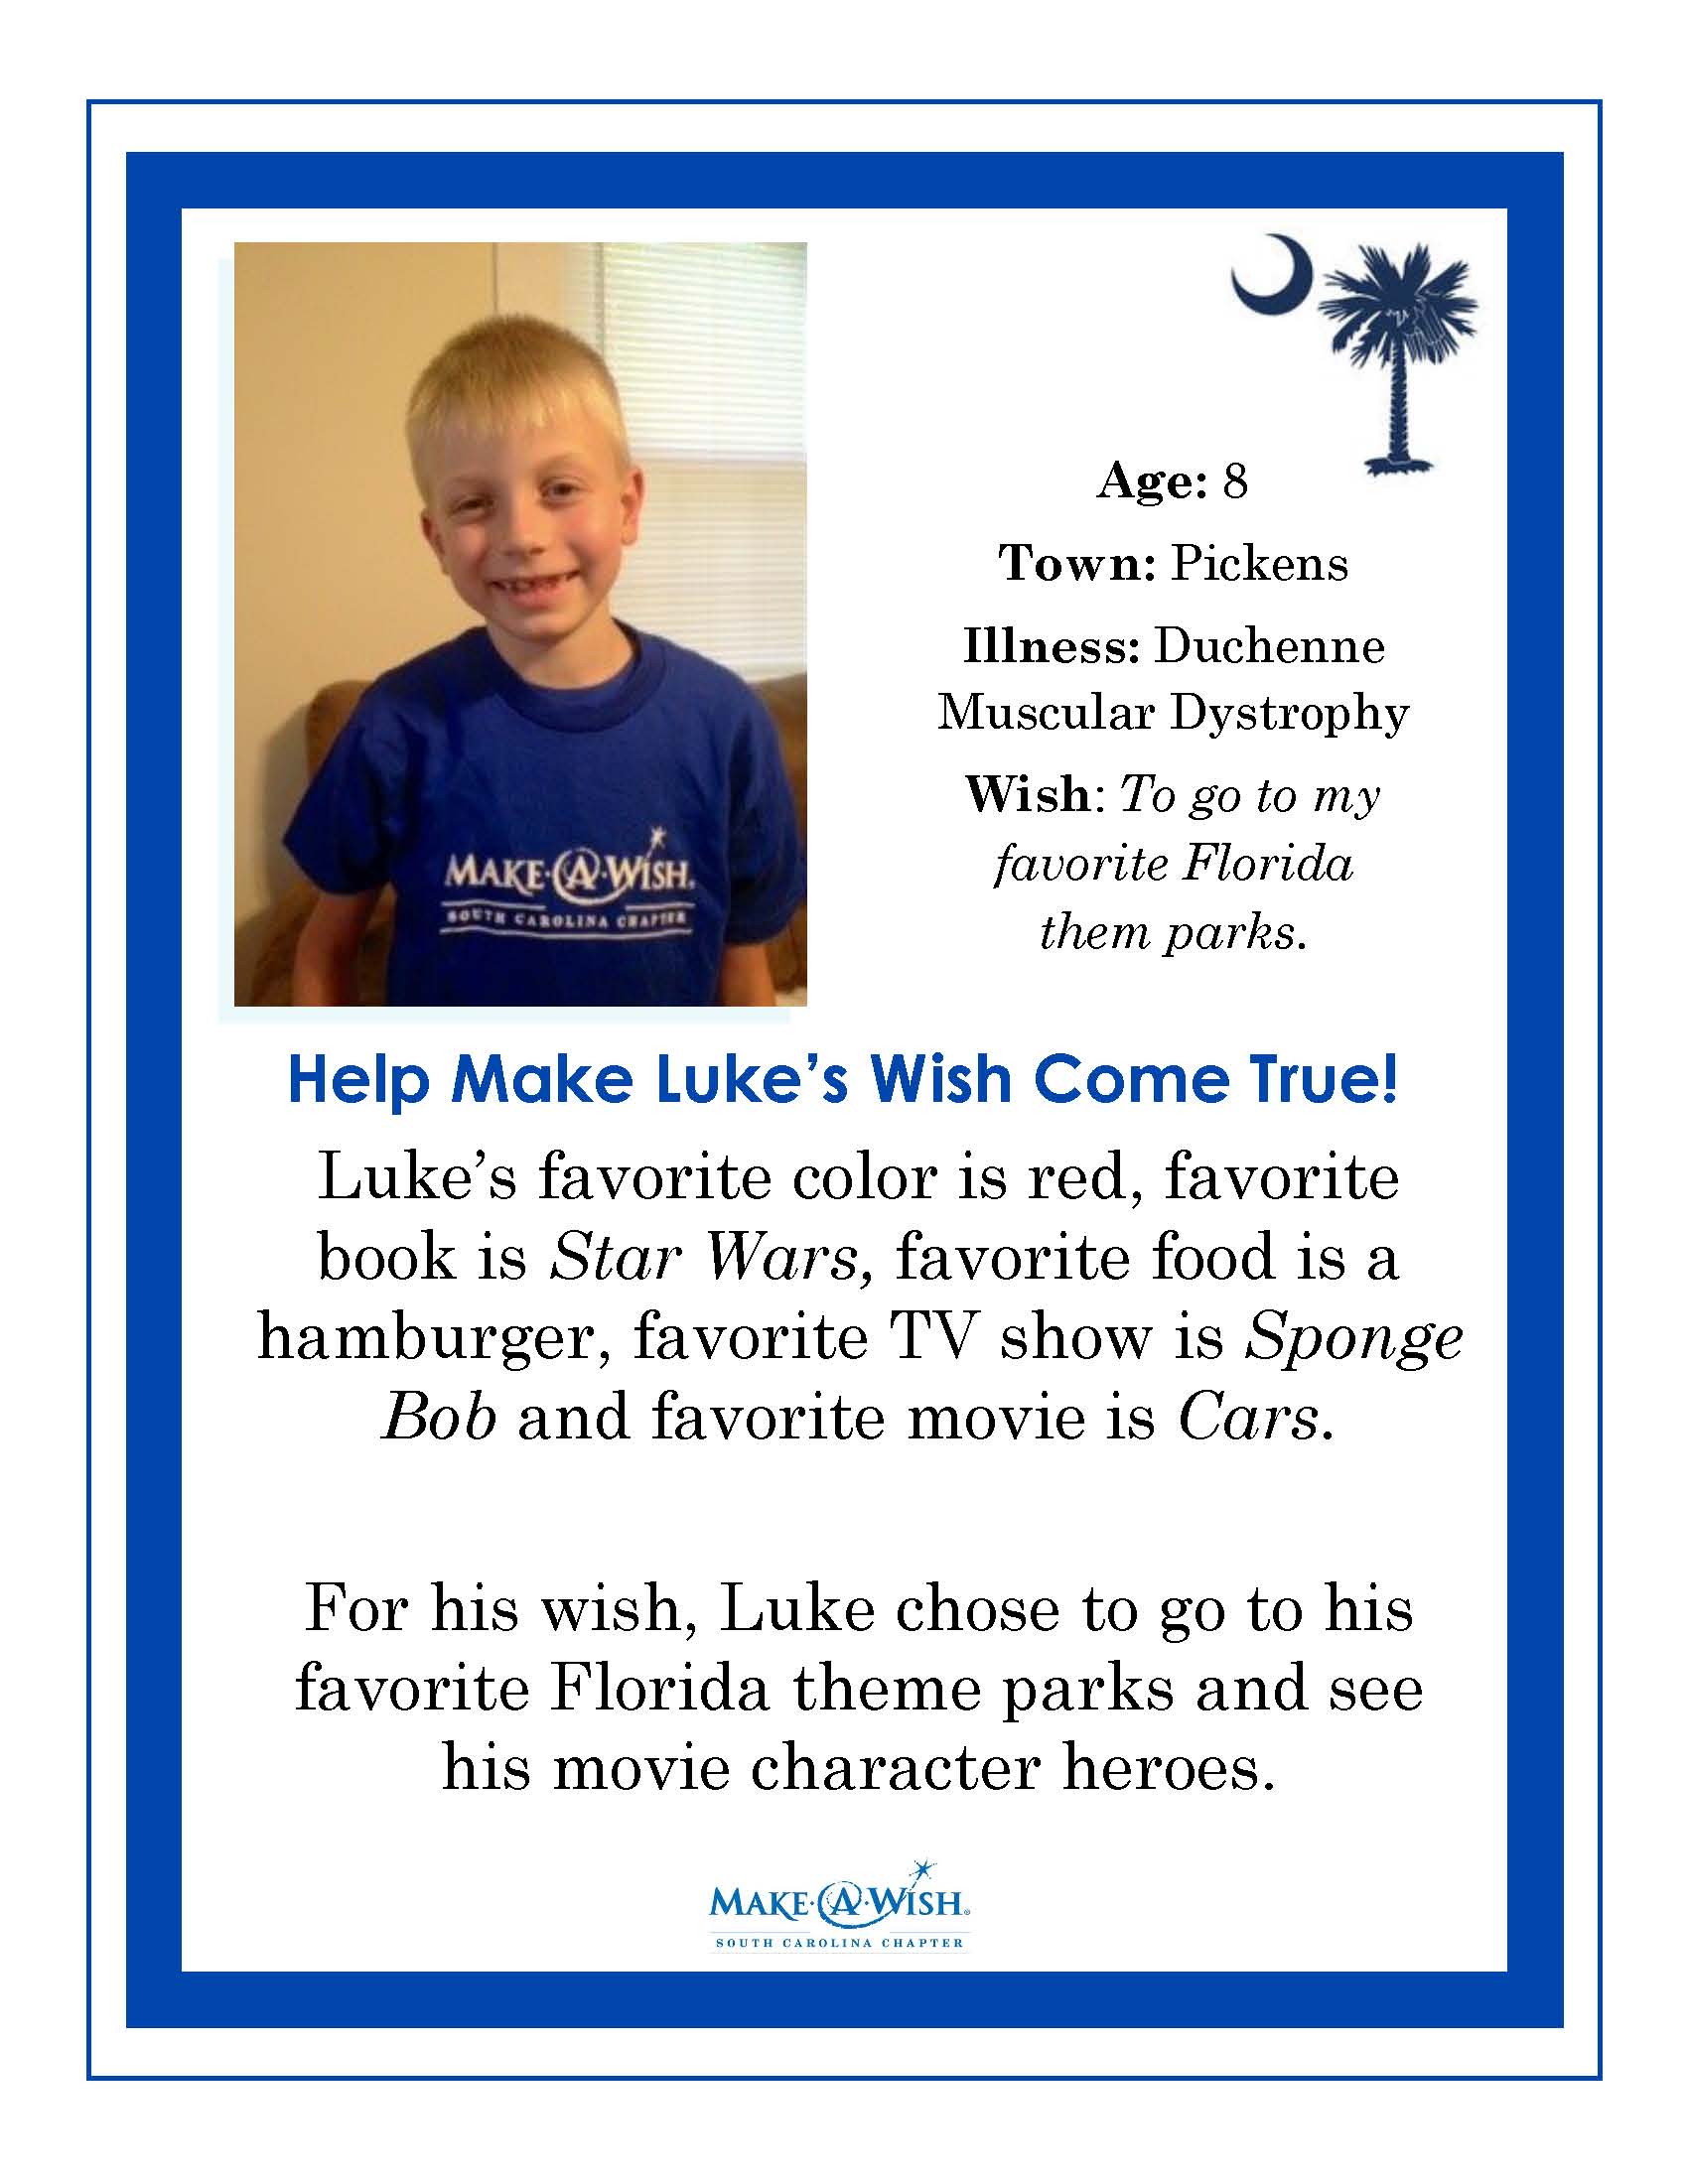 Make a Wish foundation flyer to help Luke's wish come true